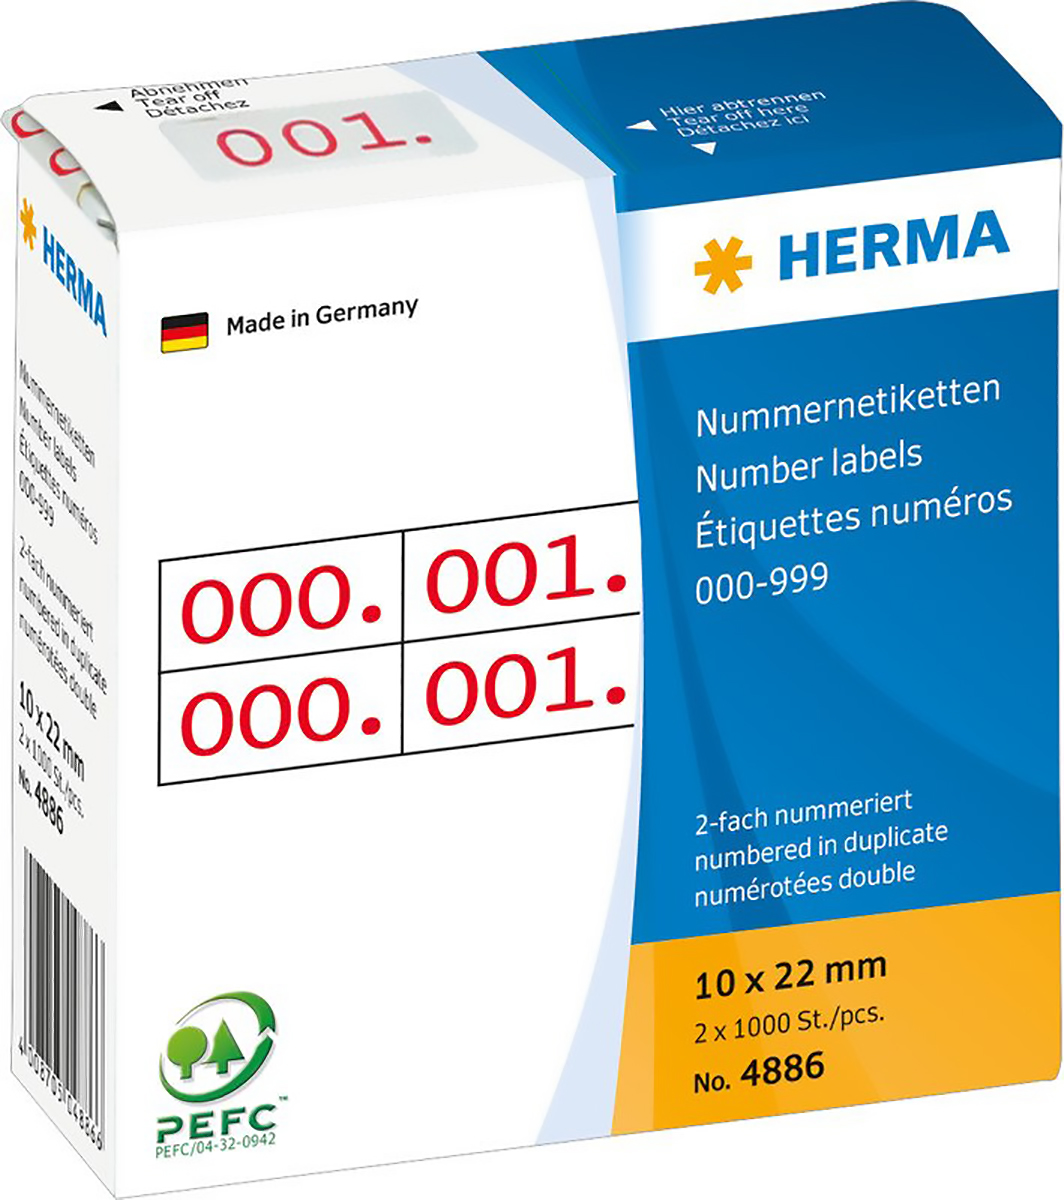 Herma Doppel-Nummer 0-999 10x22mm à 2 x 1000 Pic1